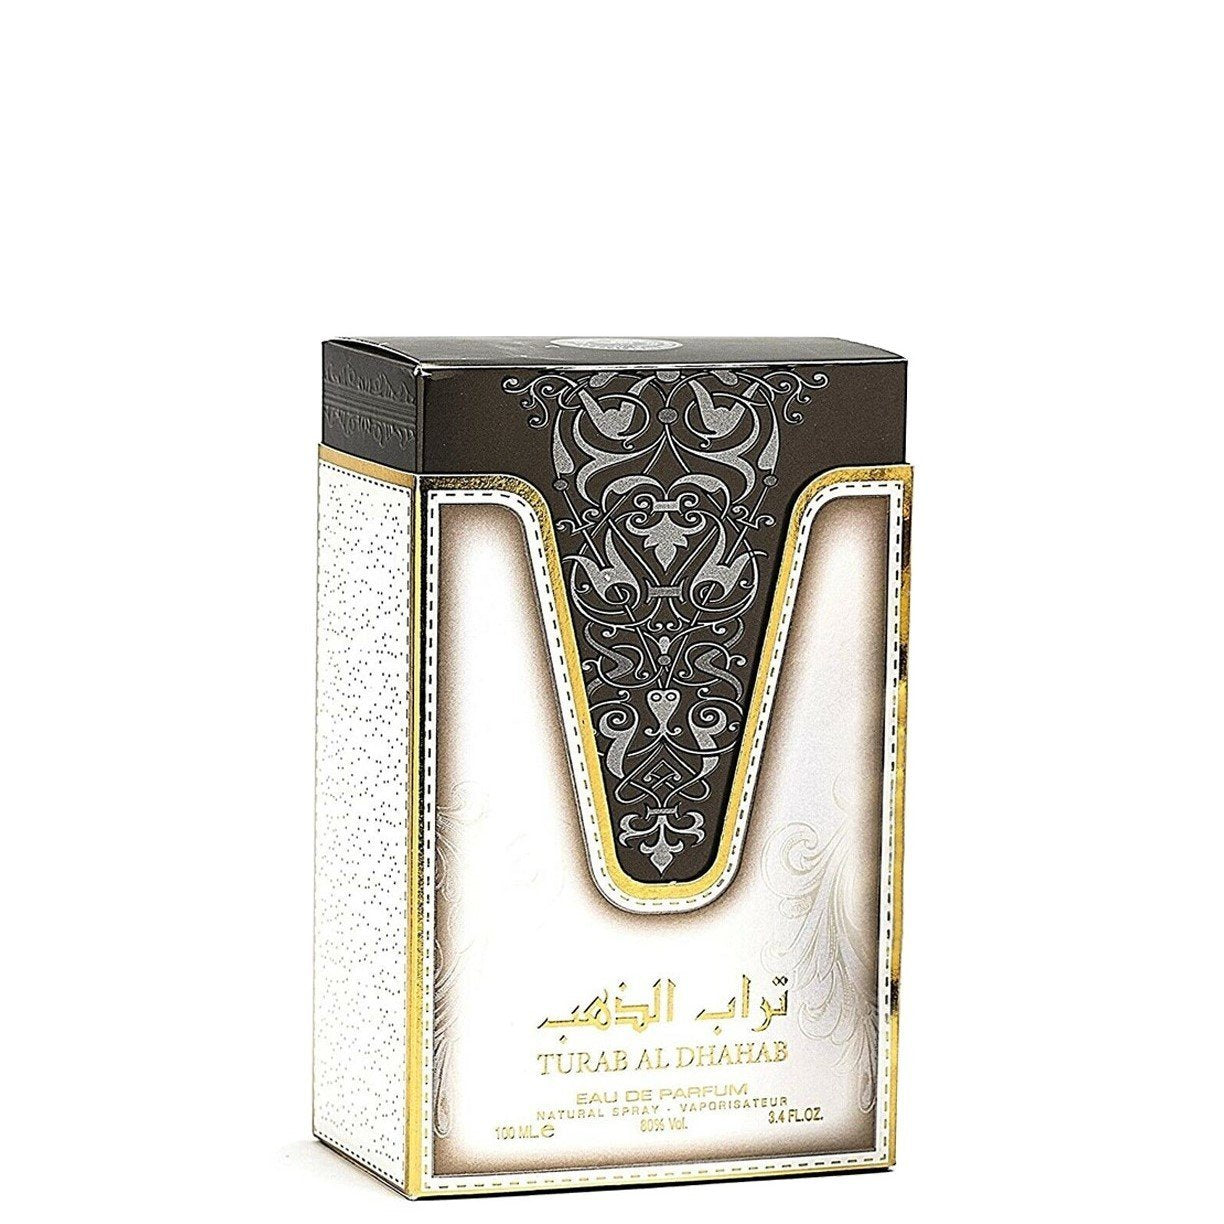 Conjunto de Oferta 100 ml Eau de Perfume Turab Al Dhahab Oriental Doce Fragrânica Almiscarado, para Homem